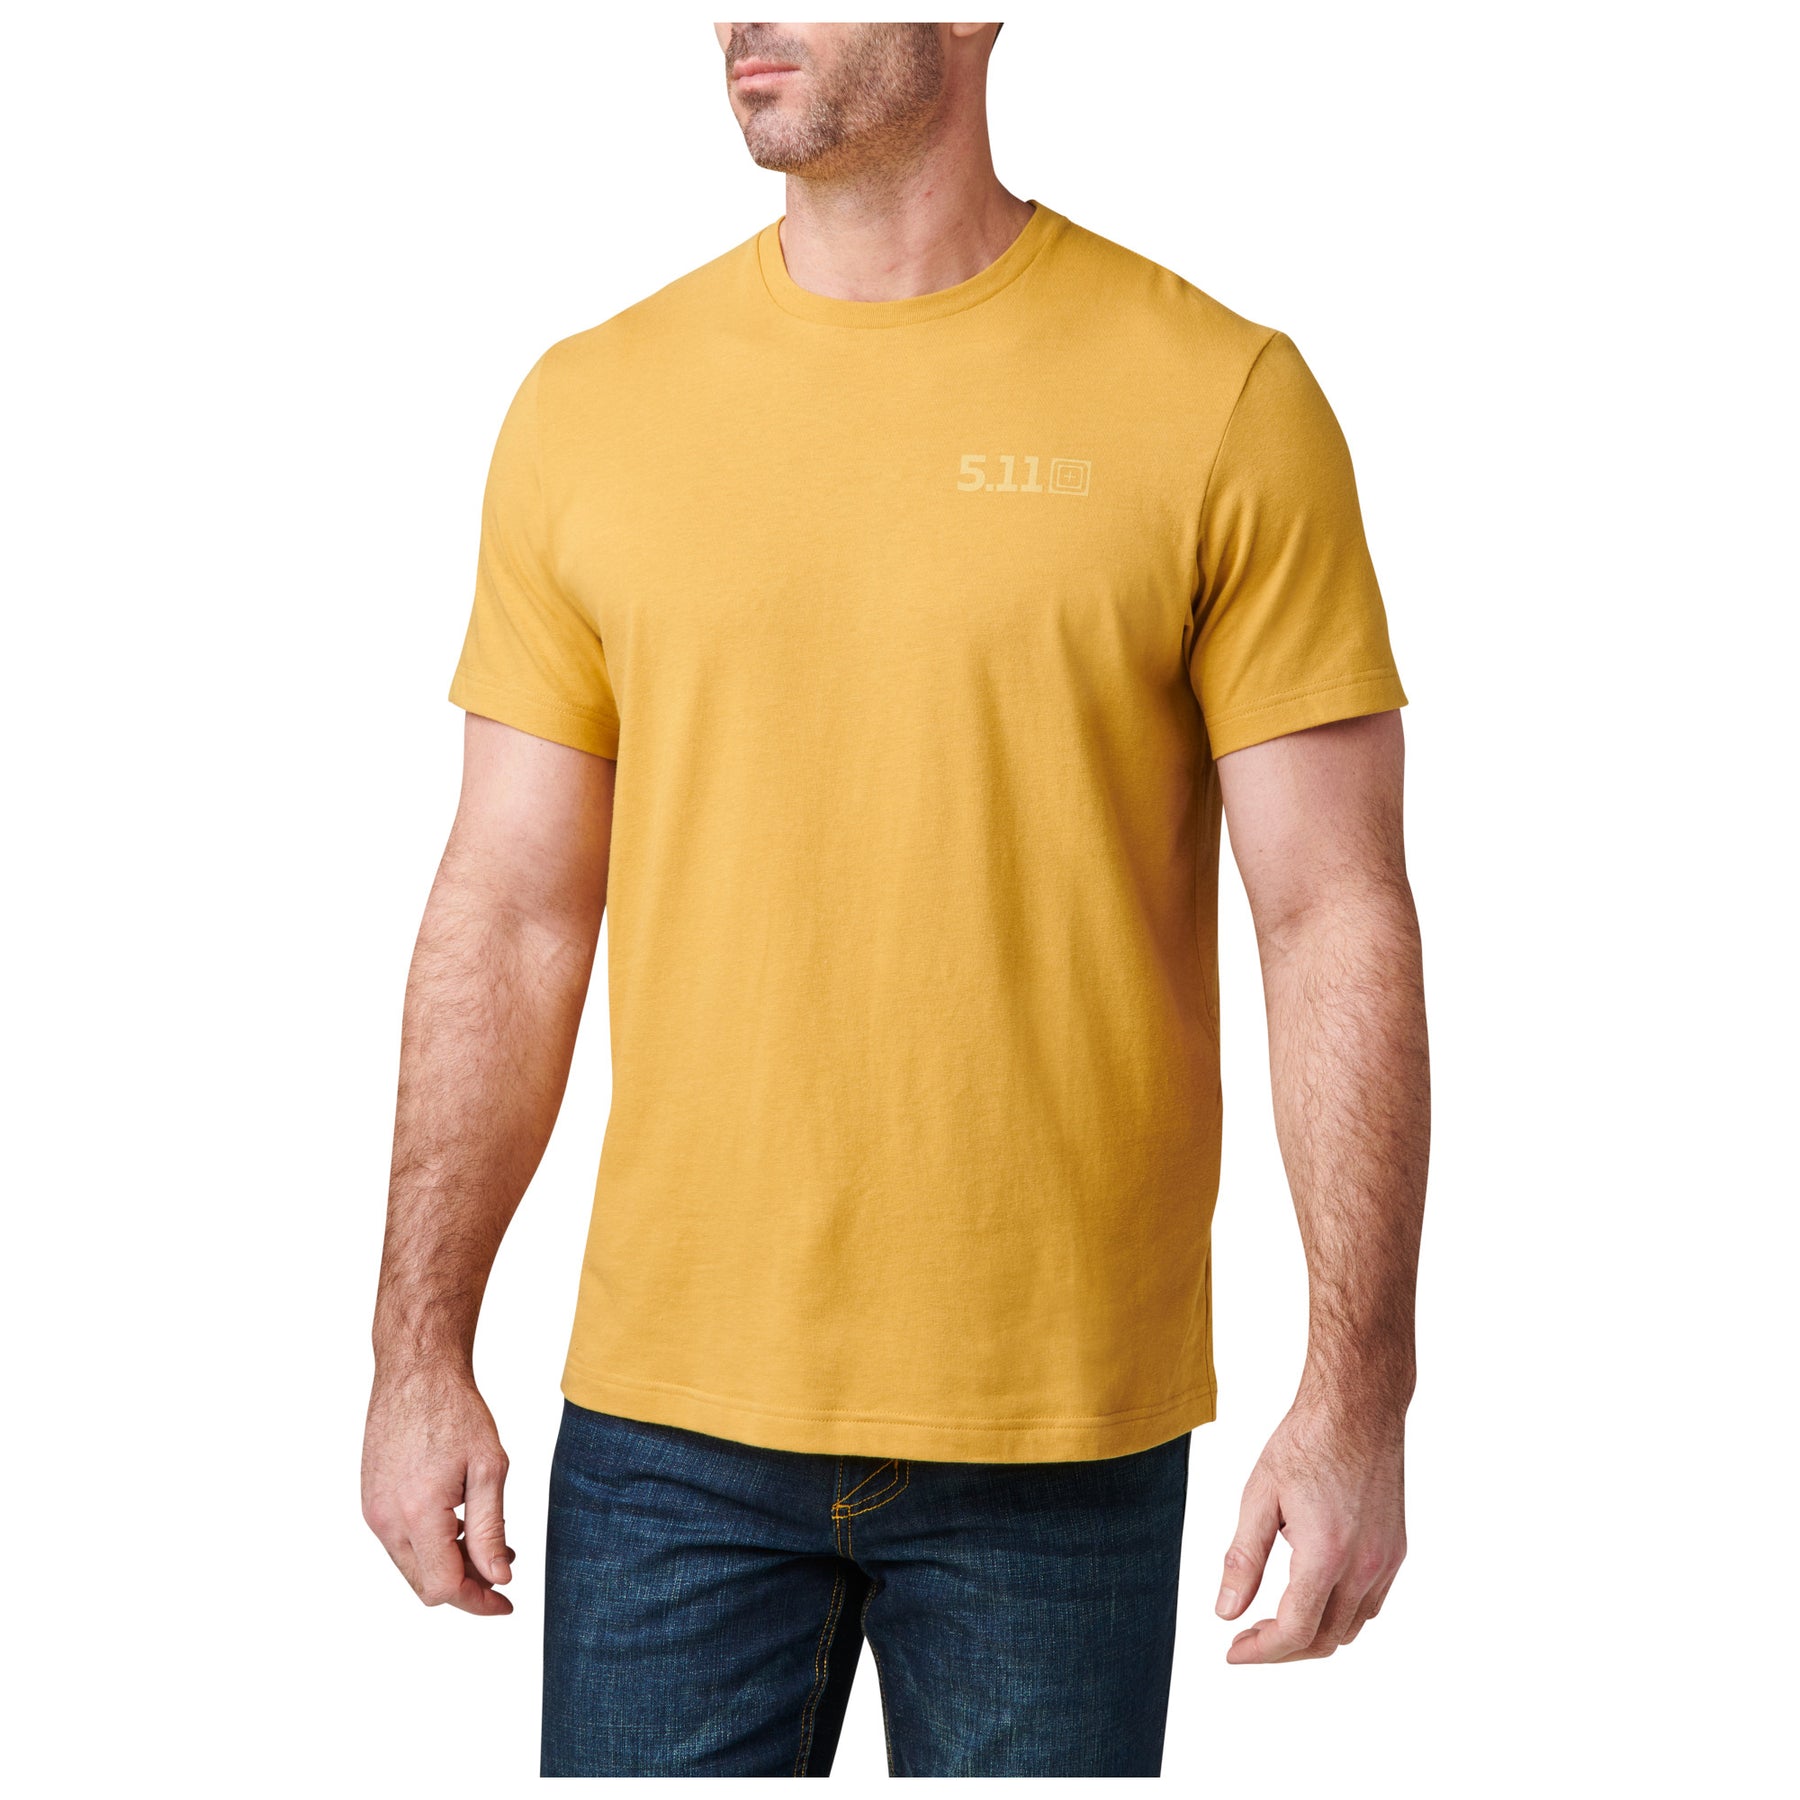 5.11 | BREW GROUNDS TEE - T-Shirt